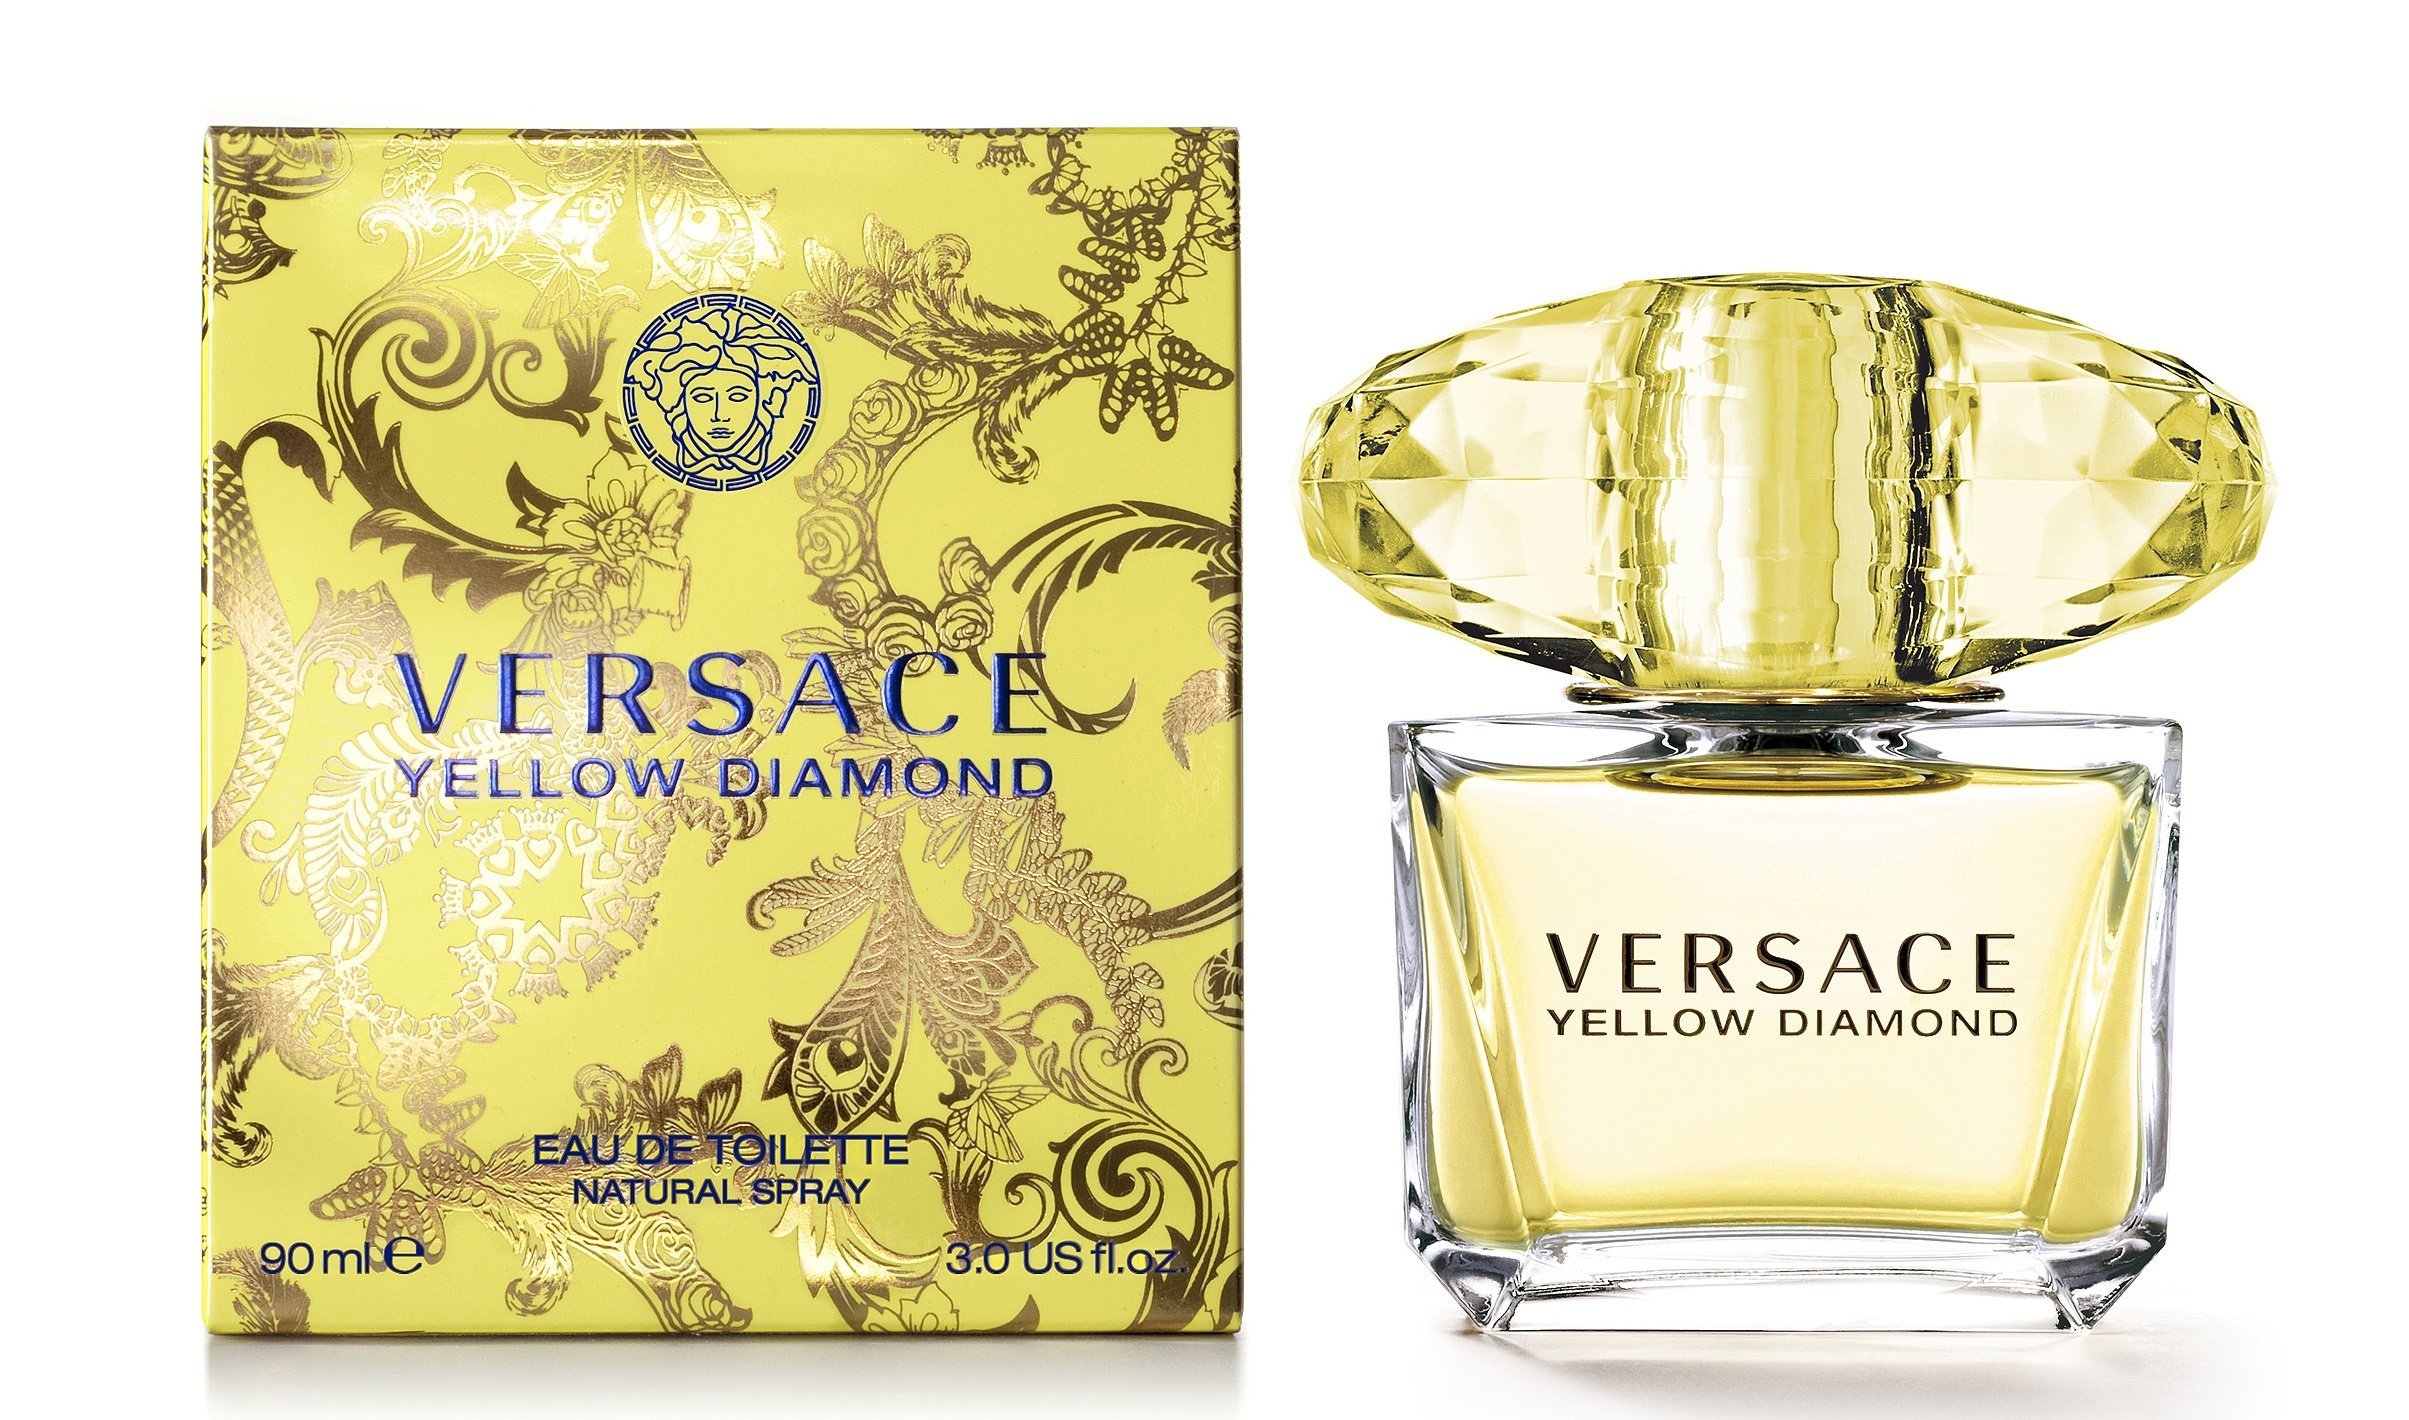 Купить Туалетная вода Versace, Versace Yellow Diamond 90ml тестер, Италия